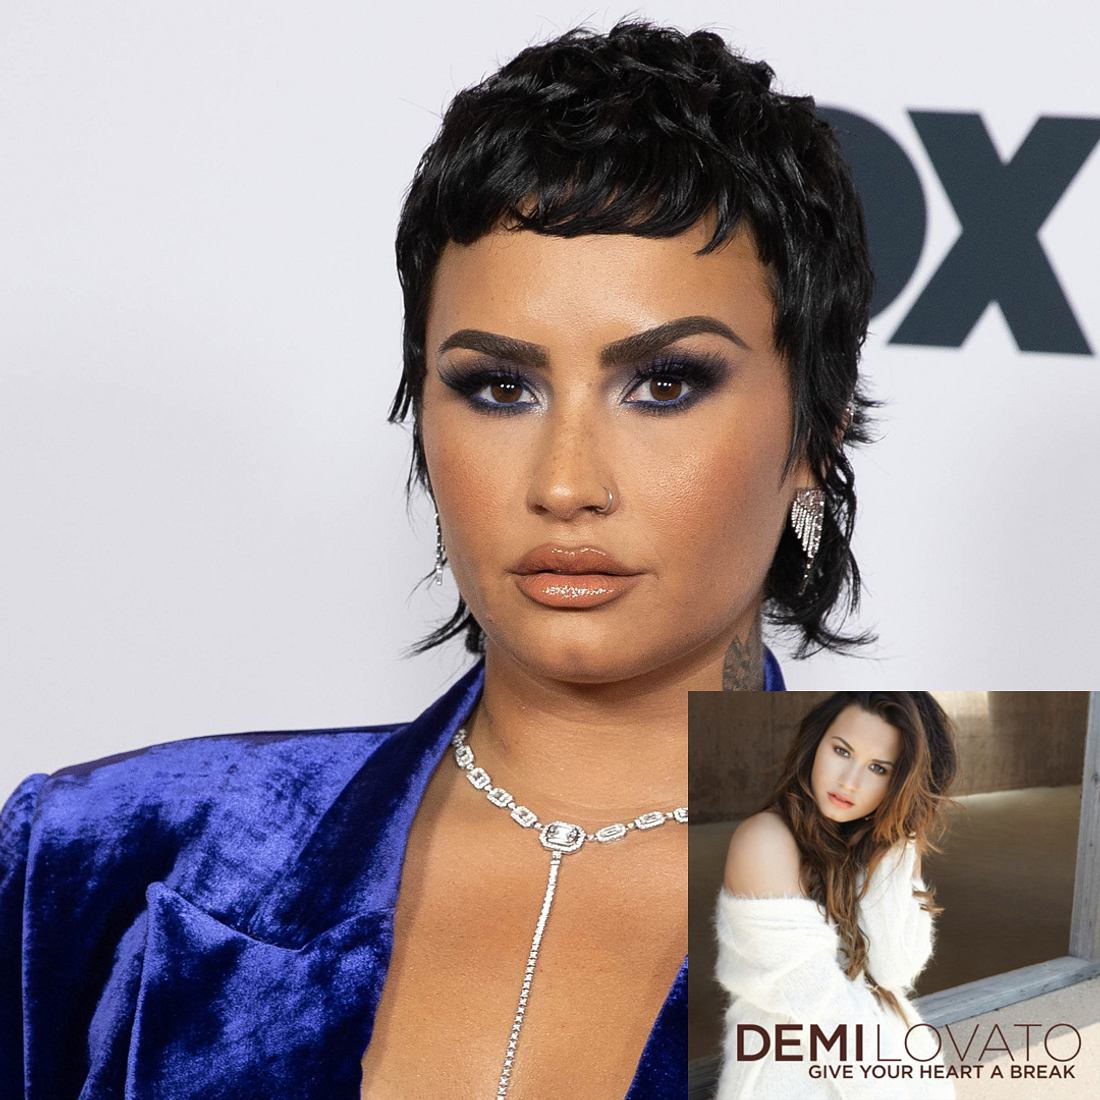 Stars, die ihre Songs hassen: Demi Lovato – Give Your Heart a Break